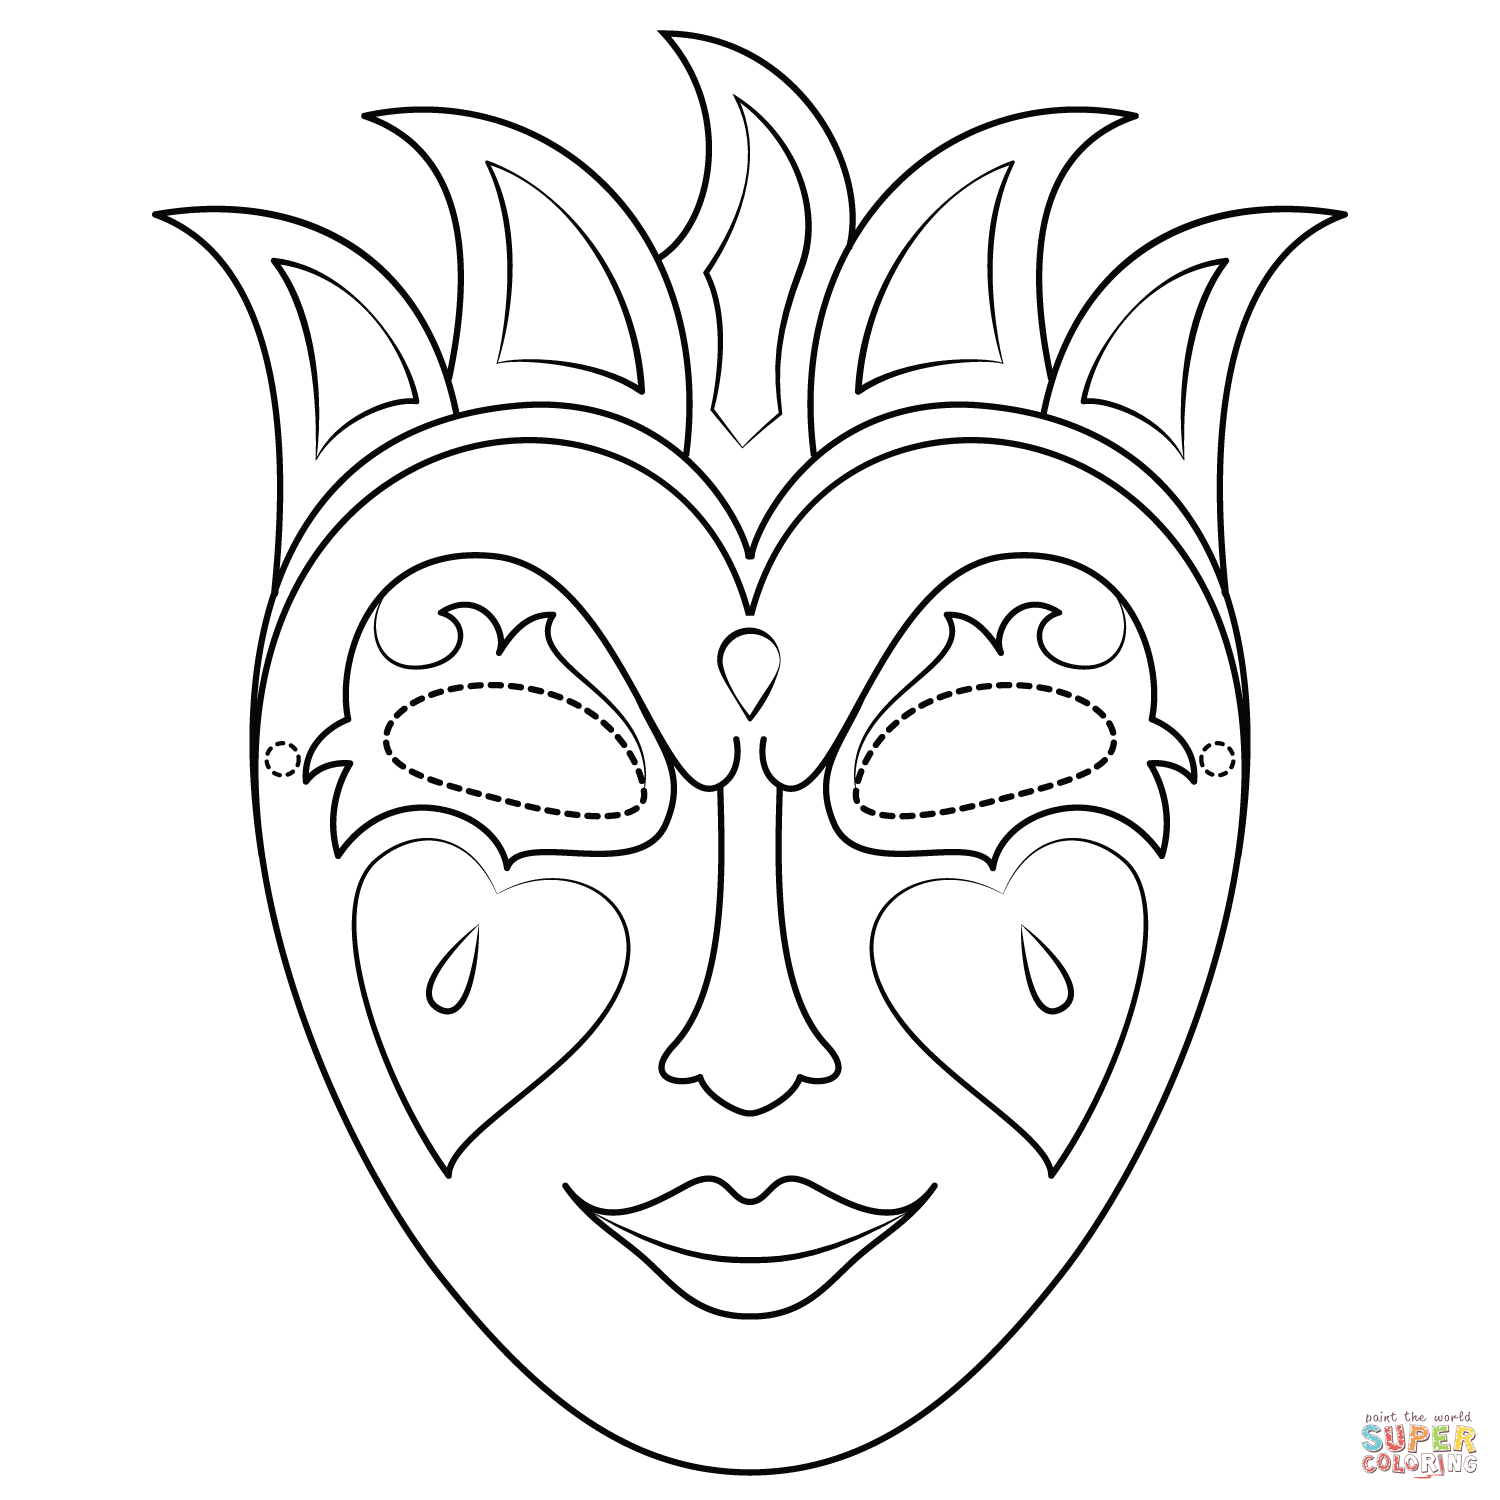 Mardi Gras Mask Coloring Page | Free Printable Coloring Pages - Free Printable Mardi Gras Masks